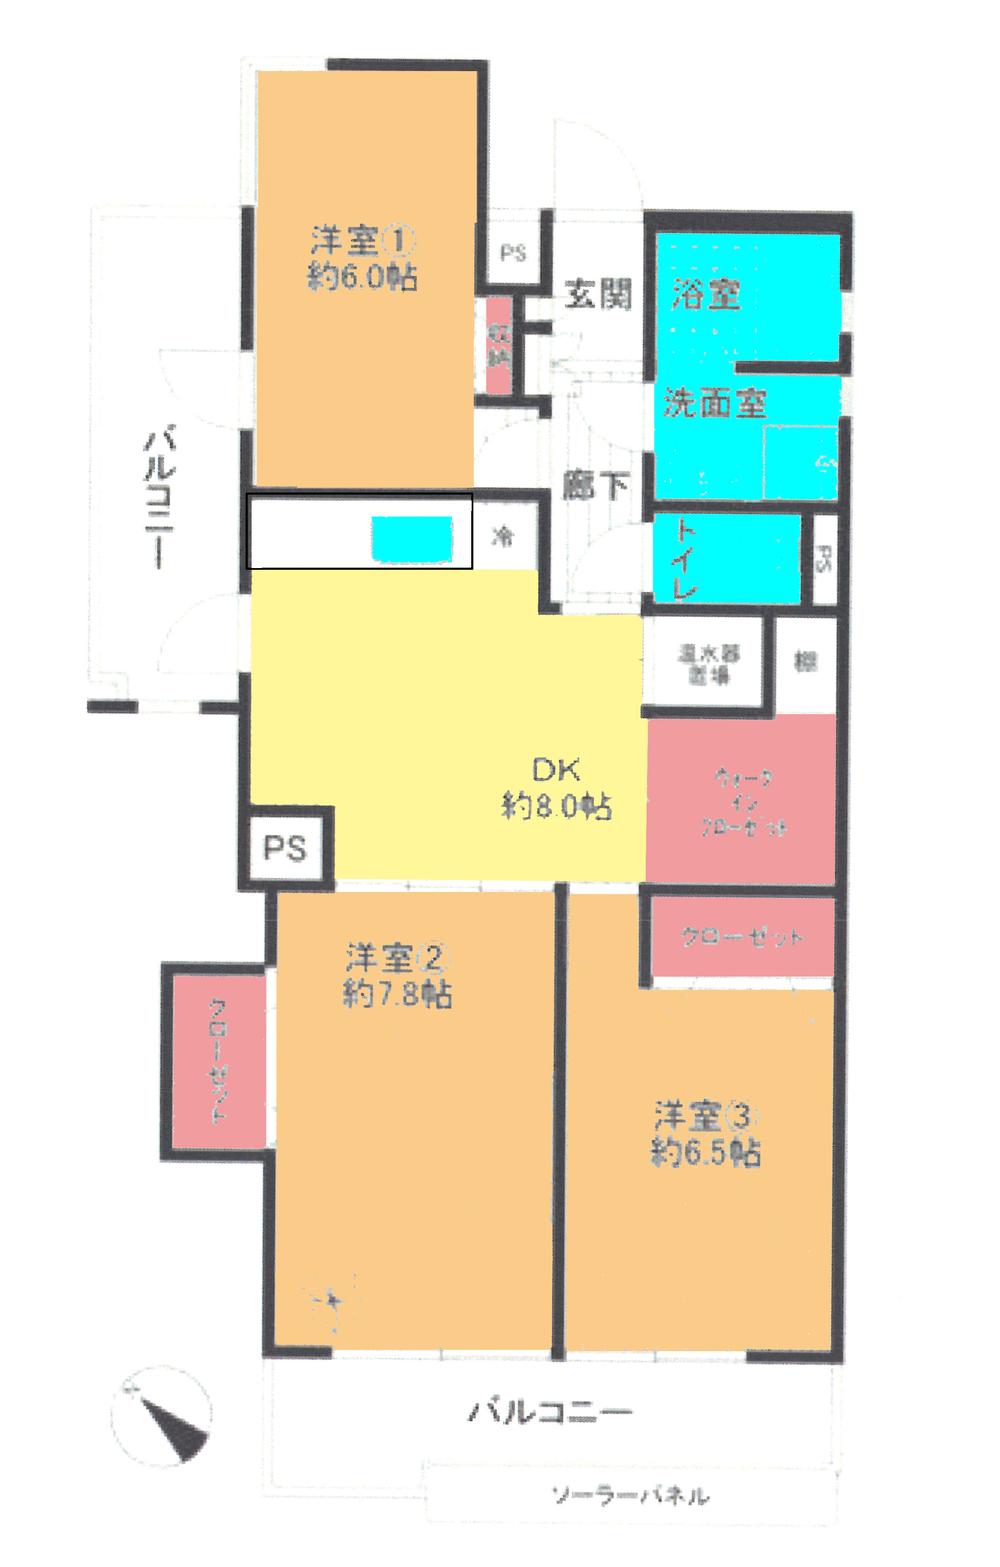 Floor plan. 3DK, Price 14.8 million yen, Occupied area 66.78 sq m , Balcony area 12.86 sq m floor plan